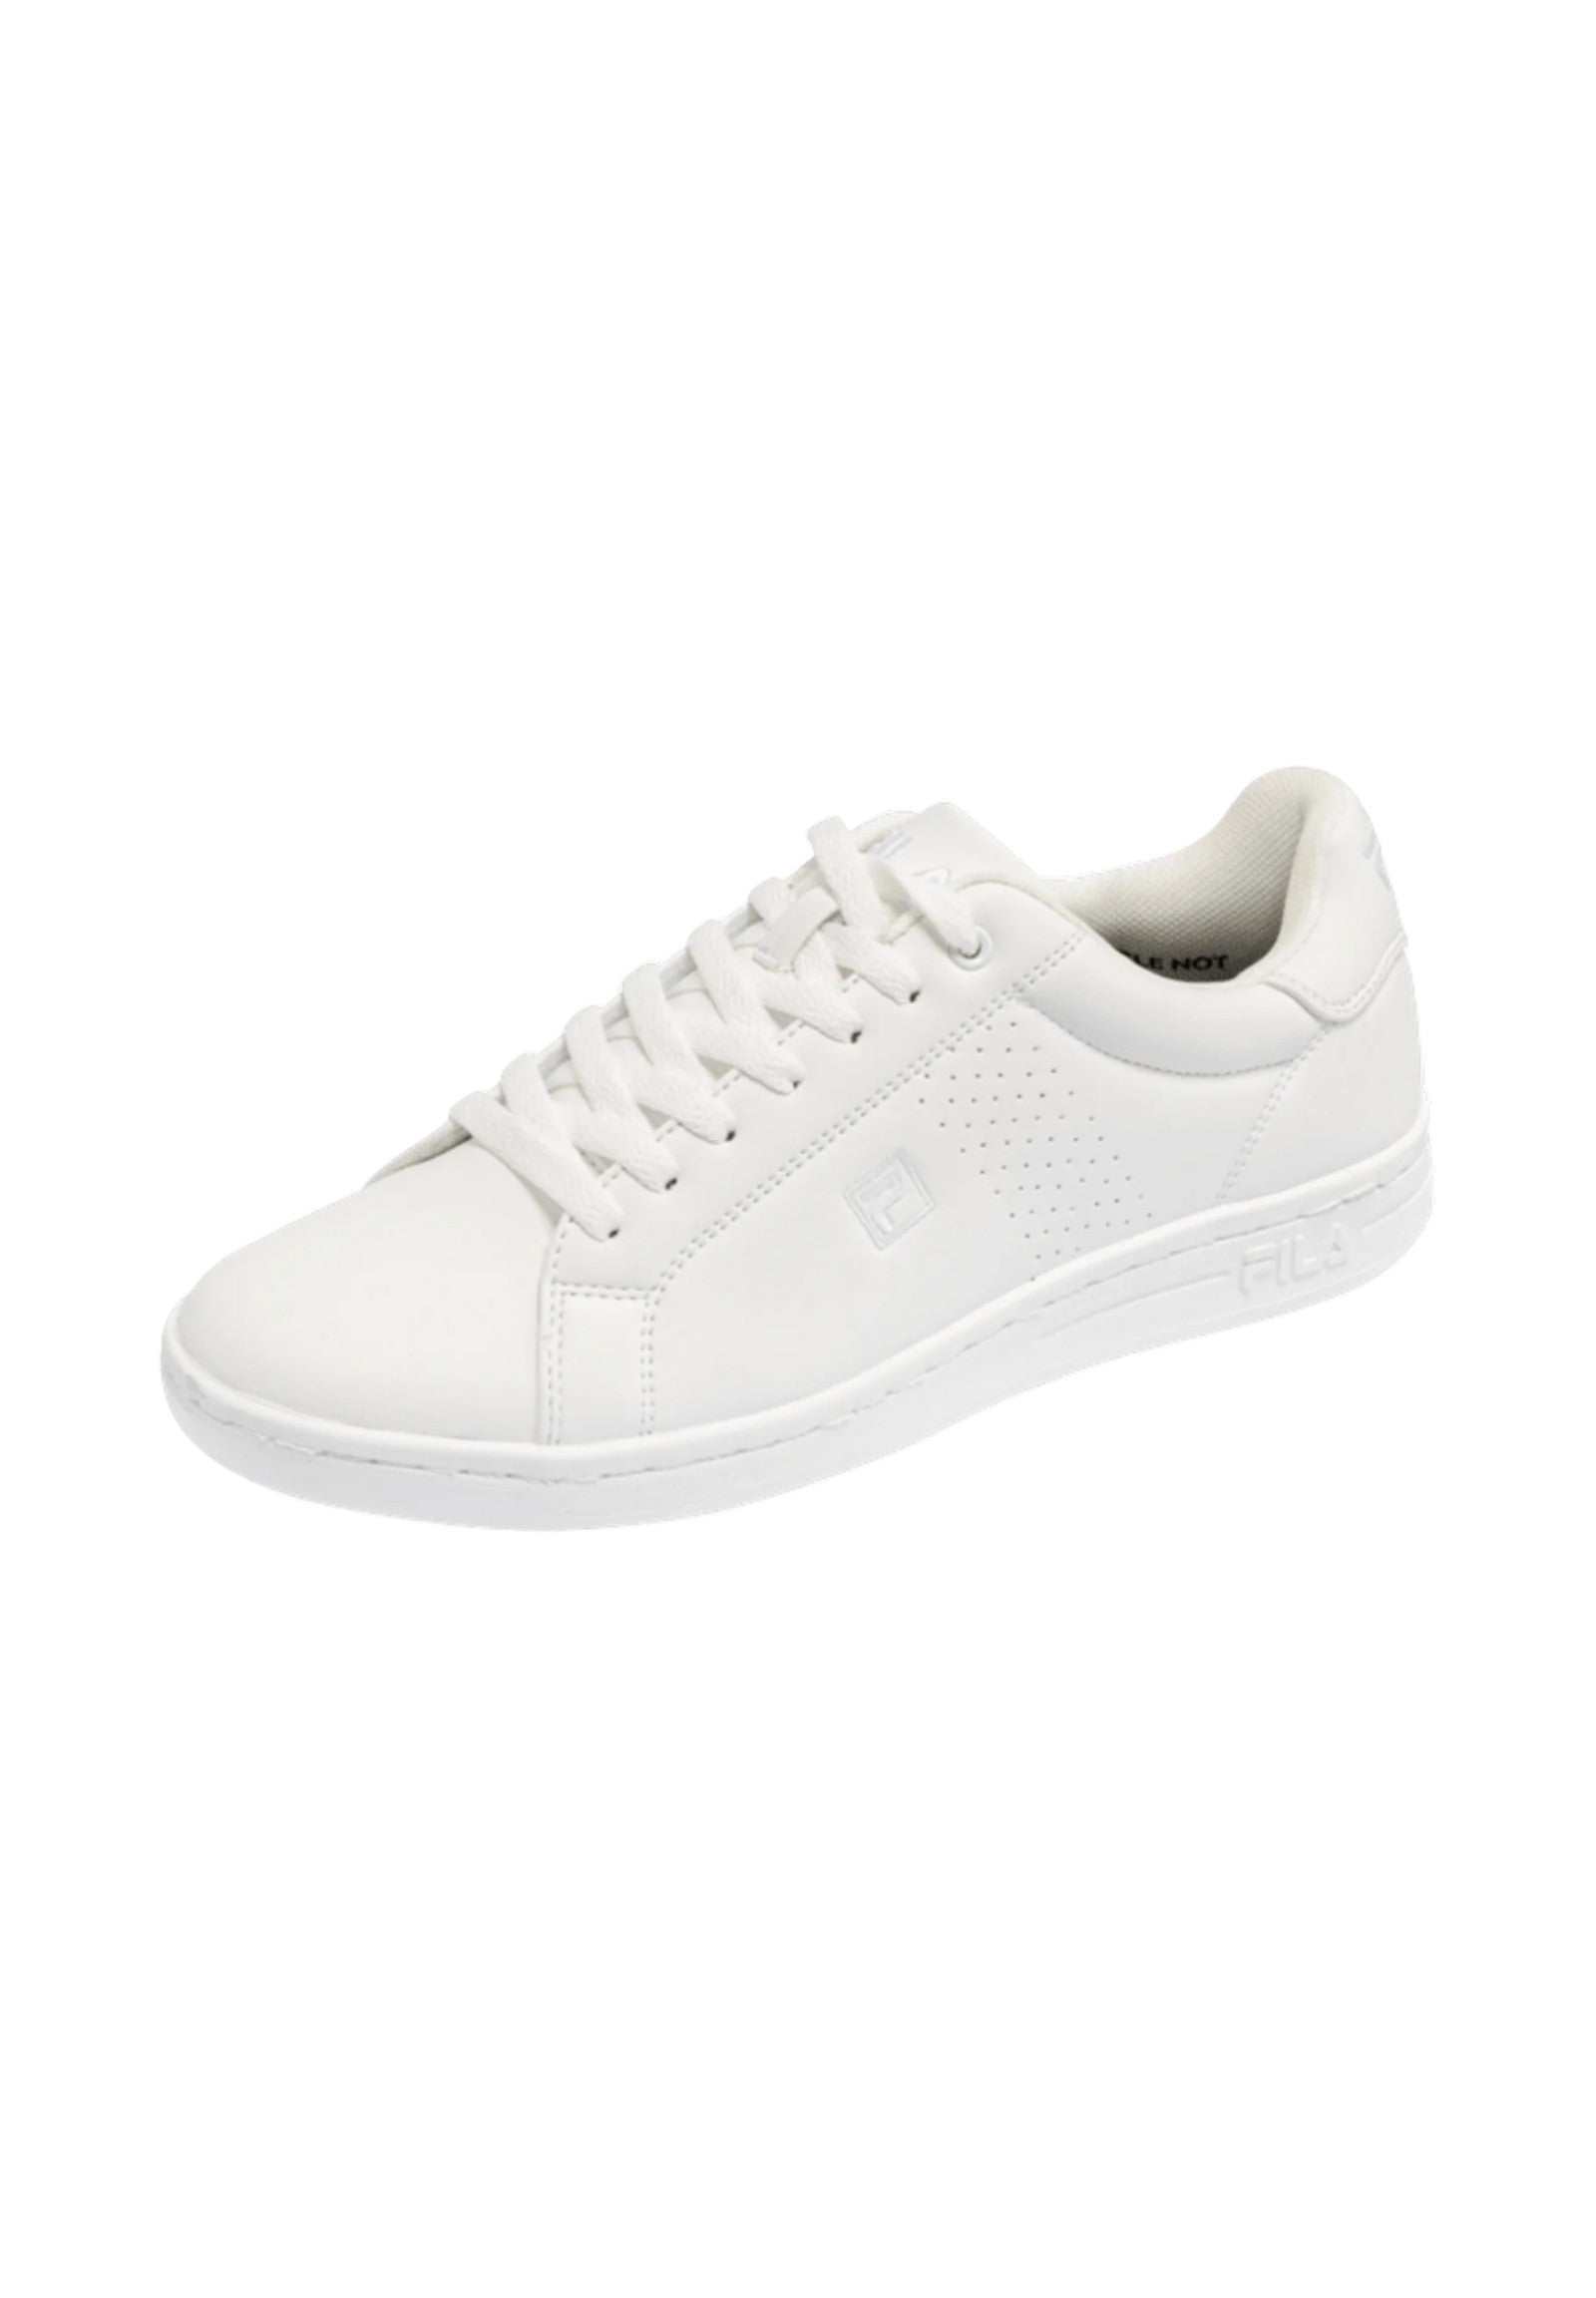 Fila Sneakers Ffm0298 White